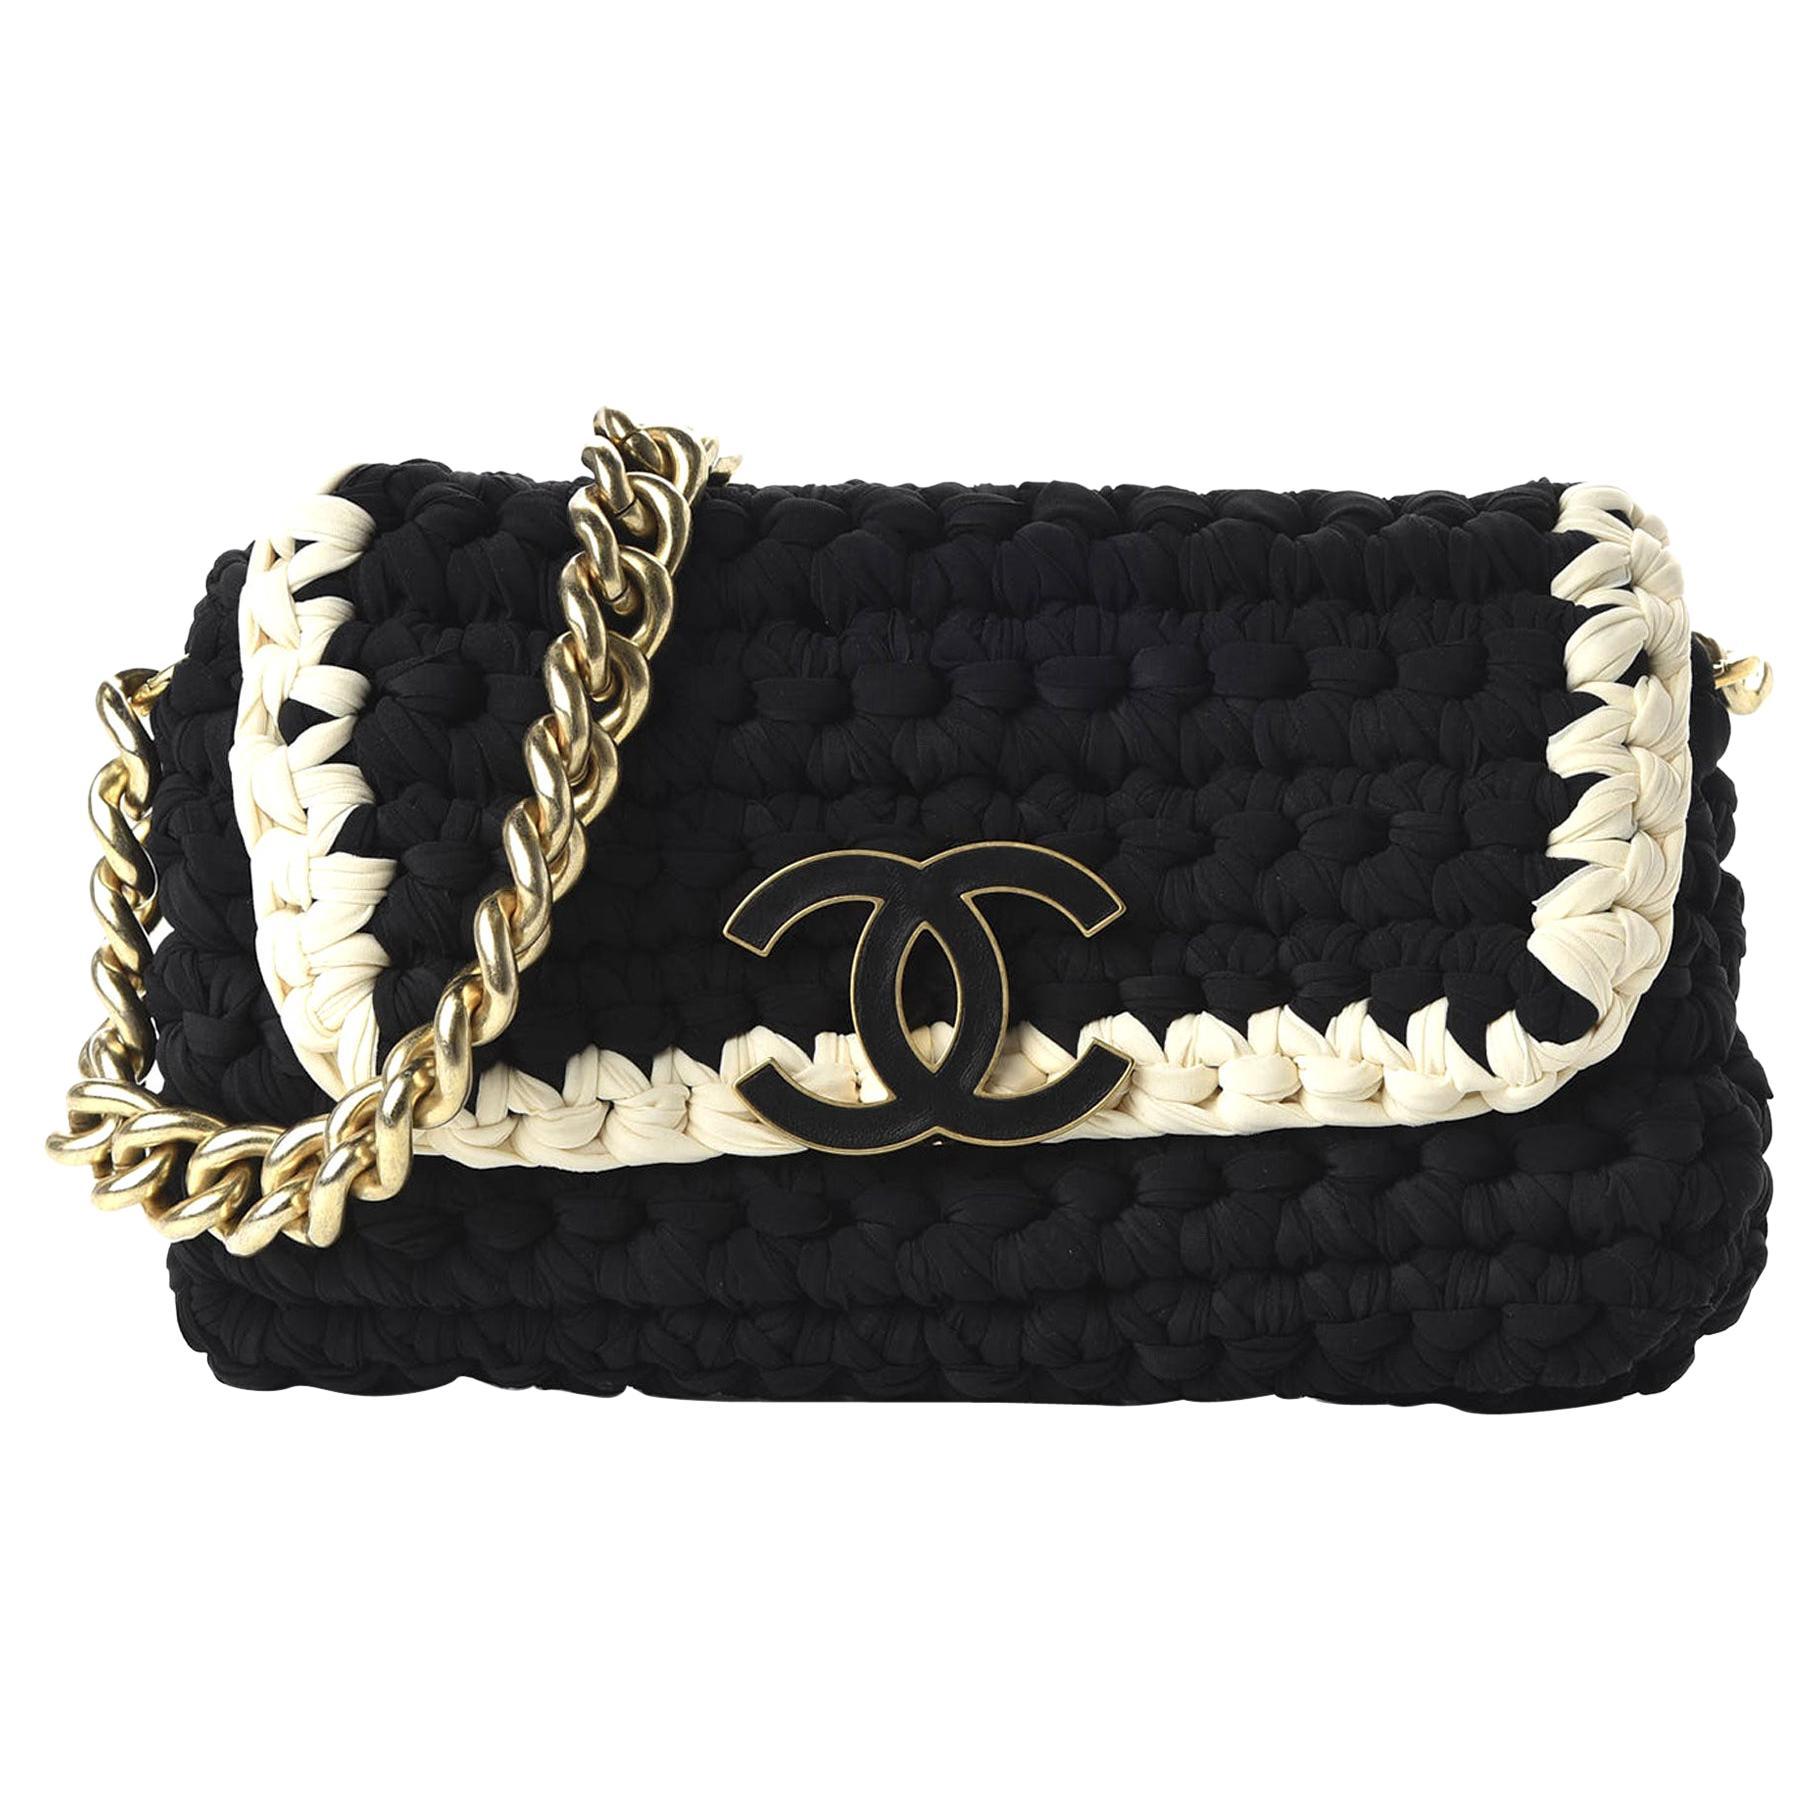 Chanel Interwoven Woven Crochet Bicolor Two Tone Medium Black & White Flap Bag